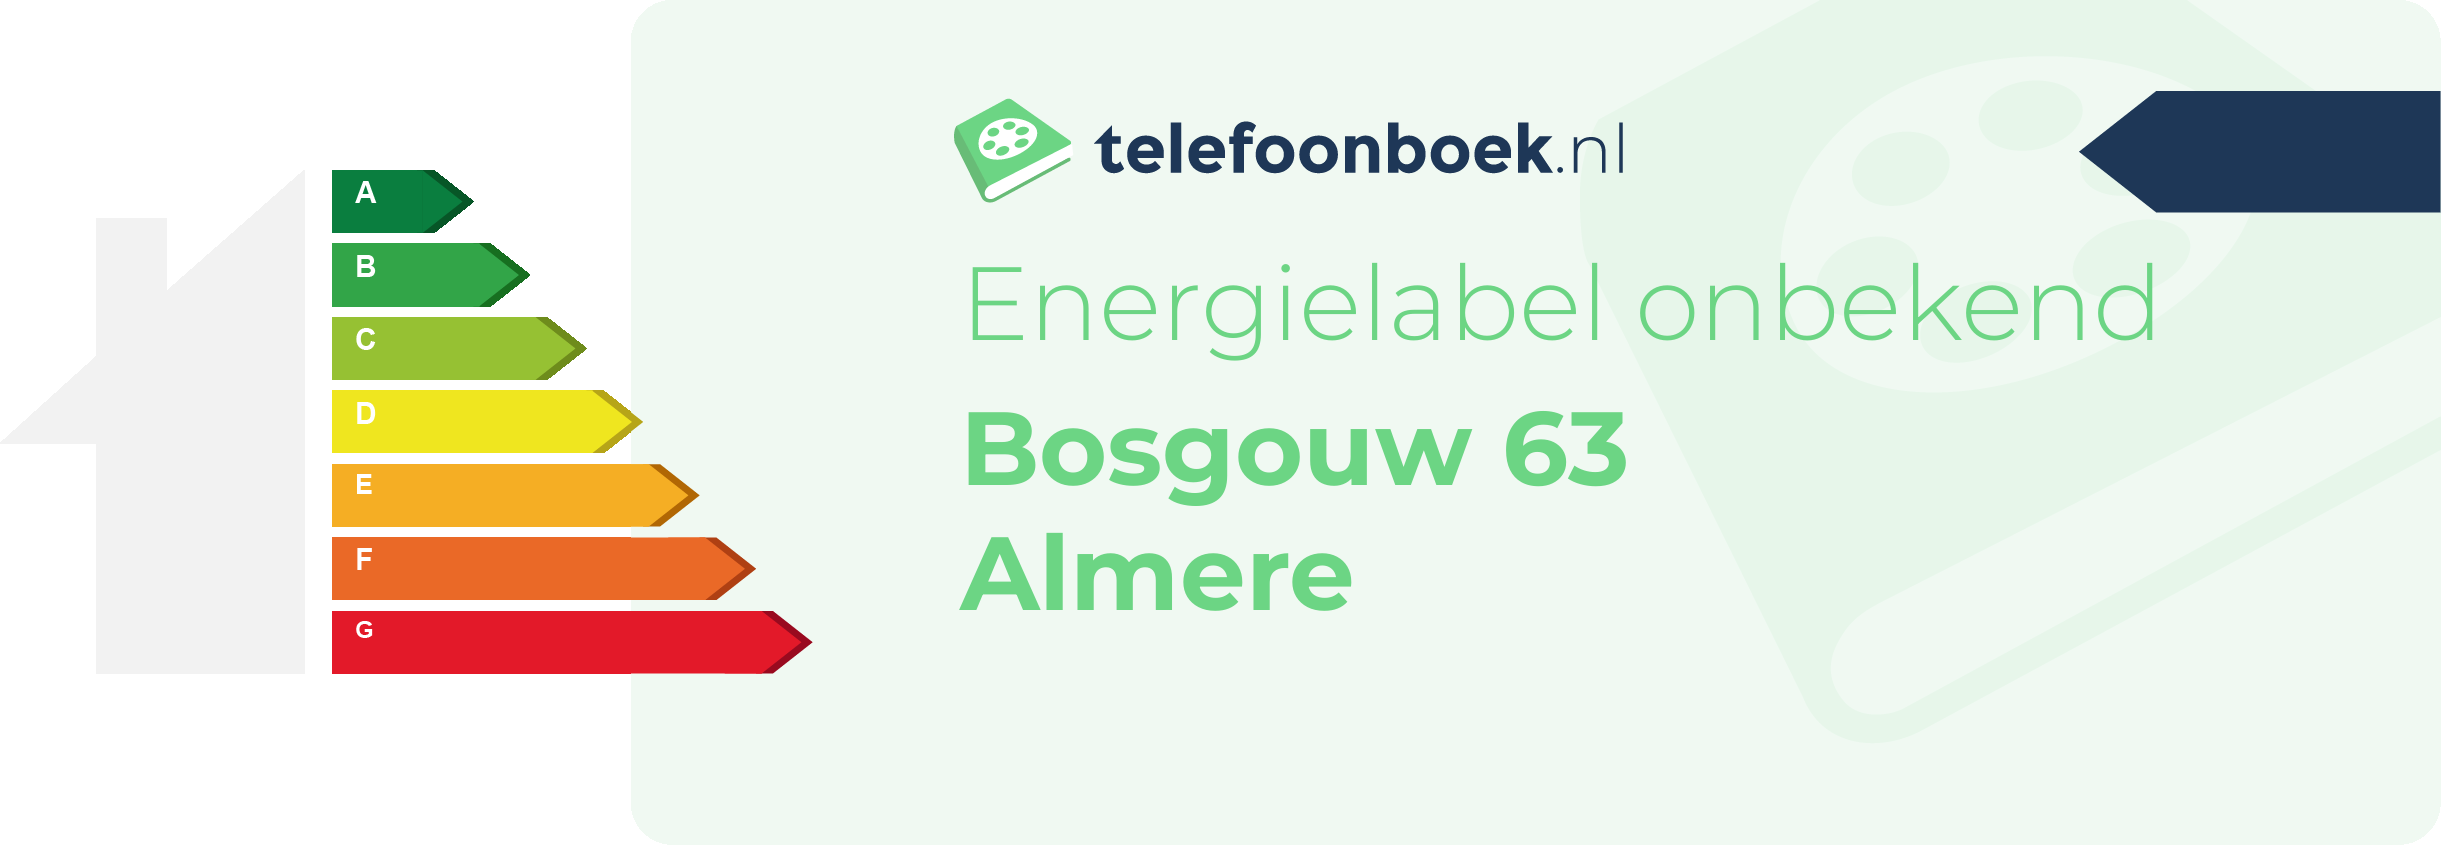 Energielabel Bosgouw 63 Almere